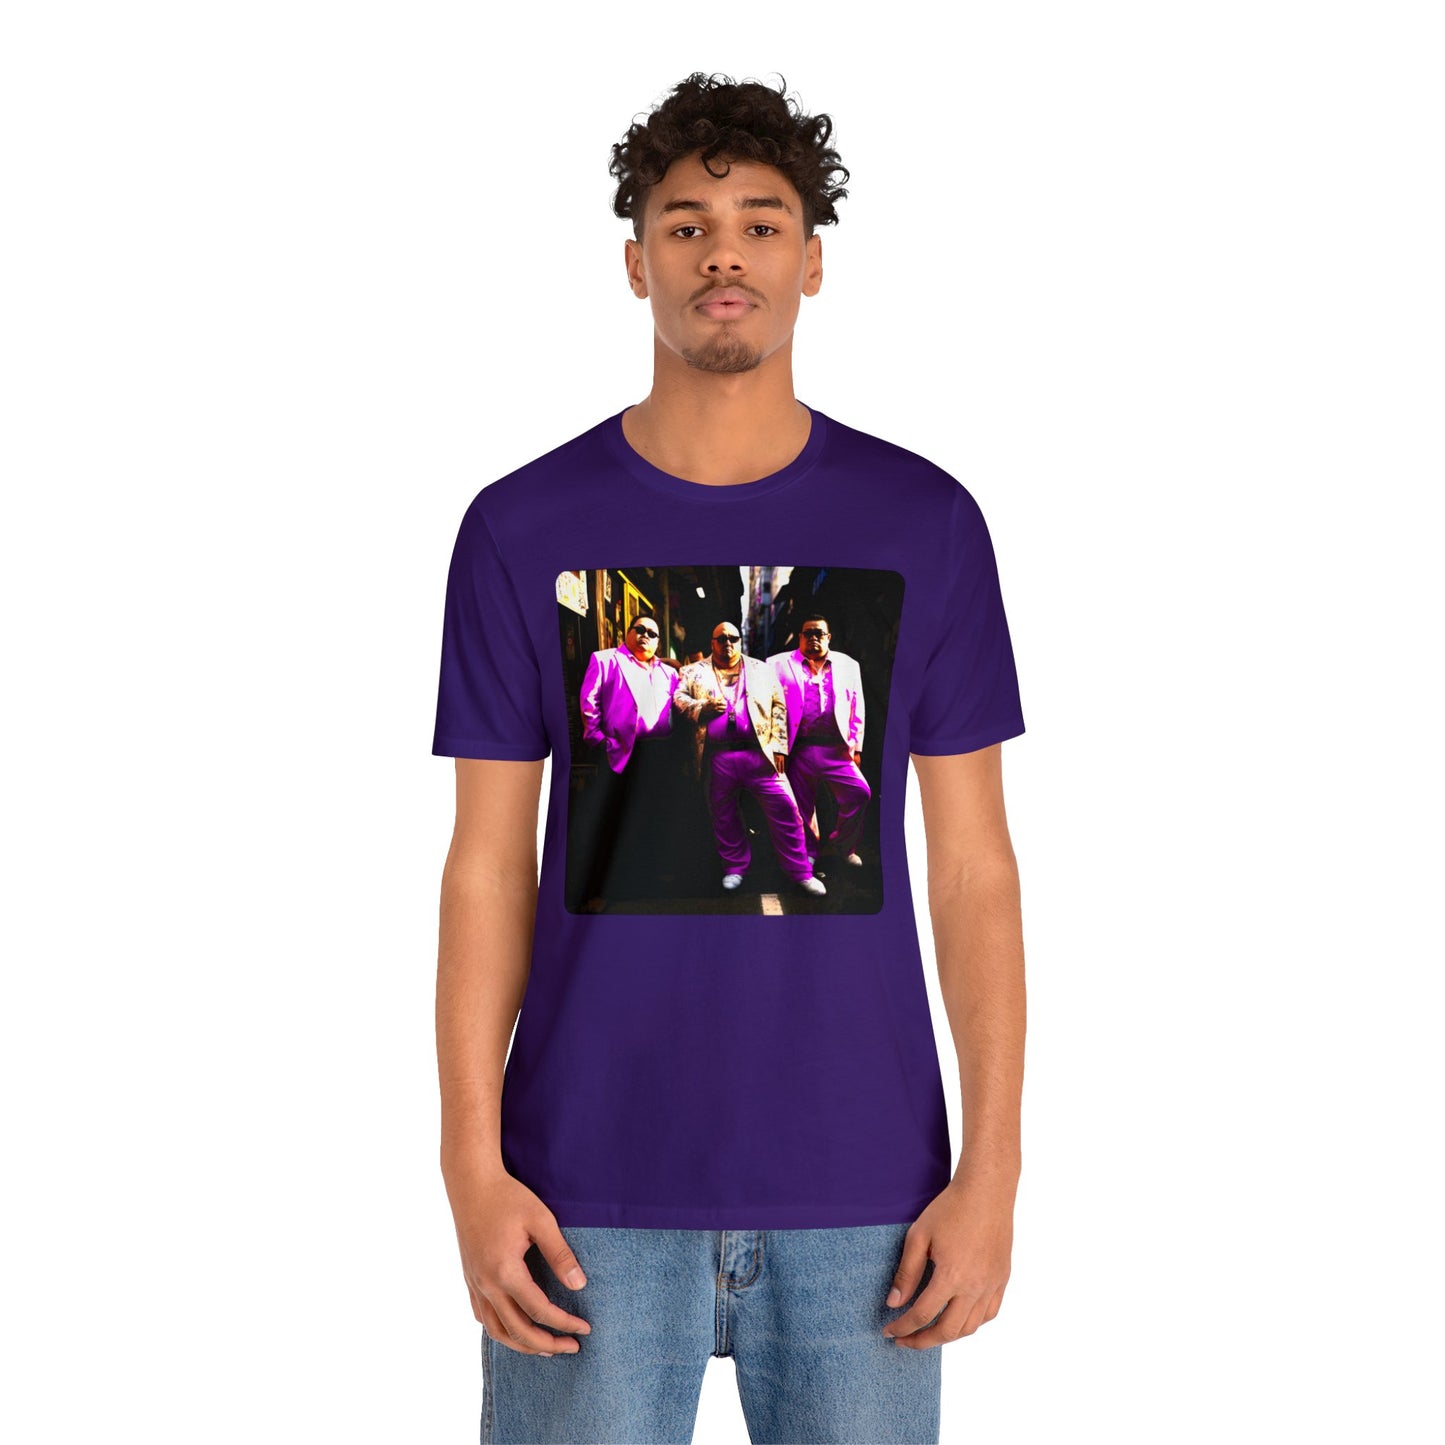 Team Purple - Hurts Shirts Collection